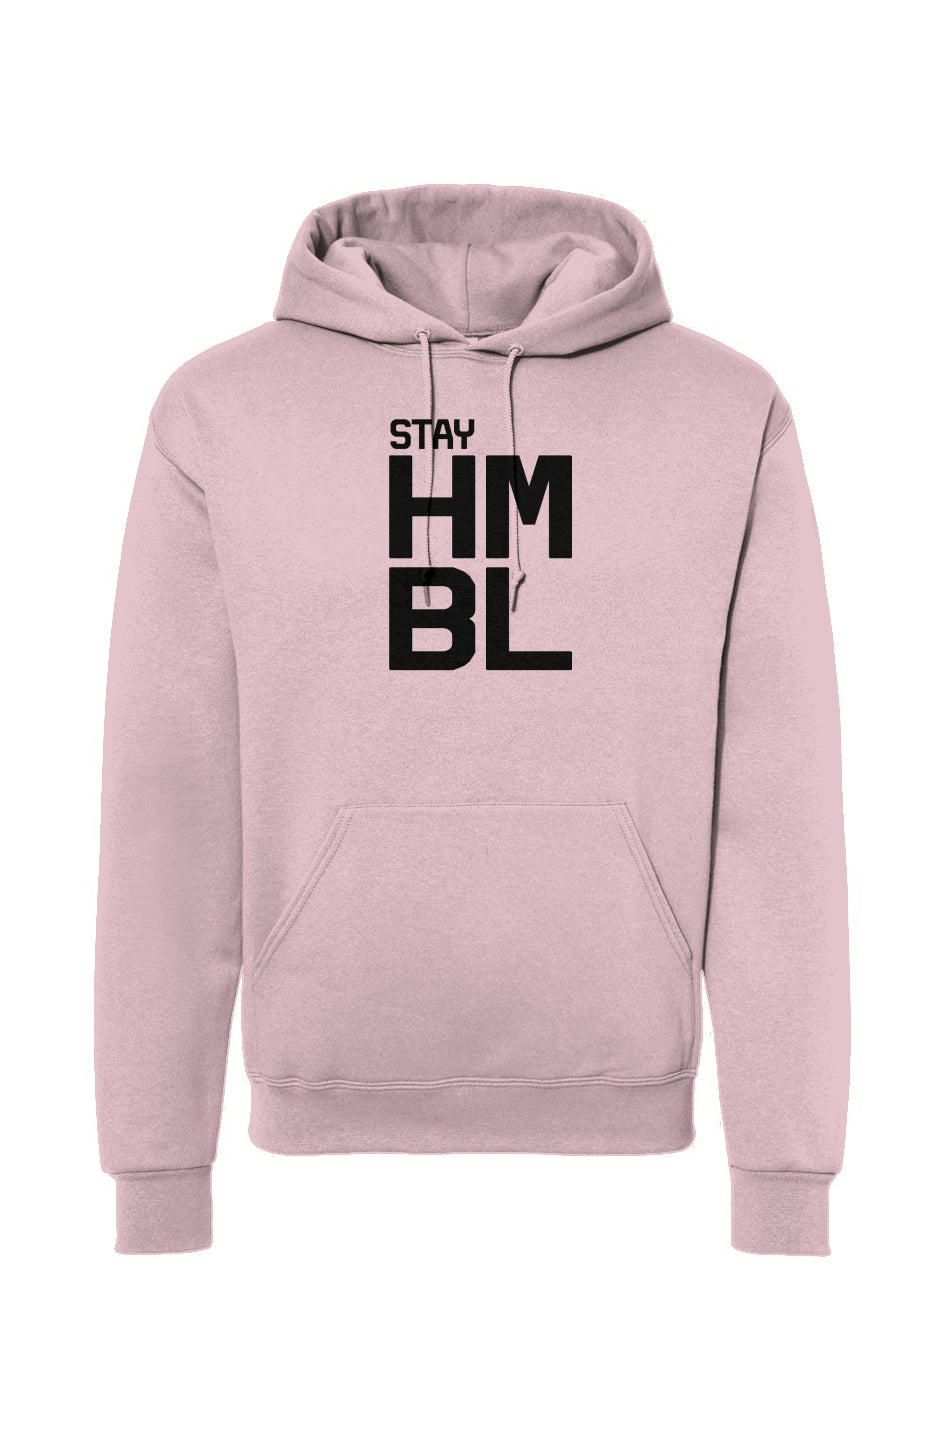 HMBL Hooded Sweatshirt